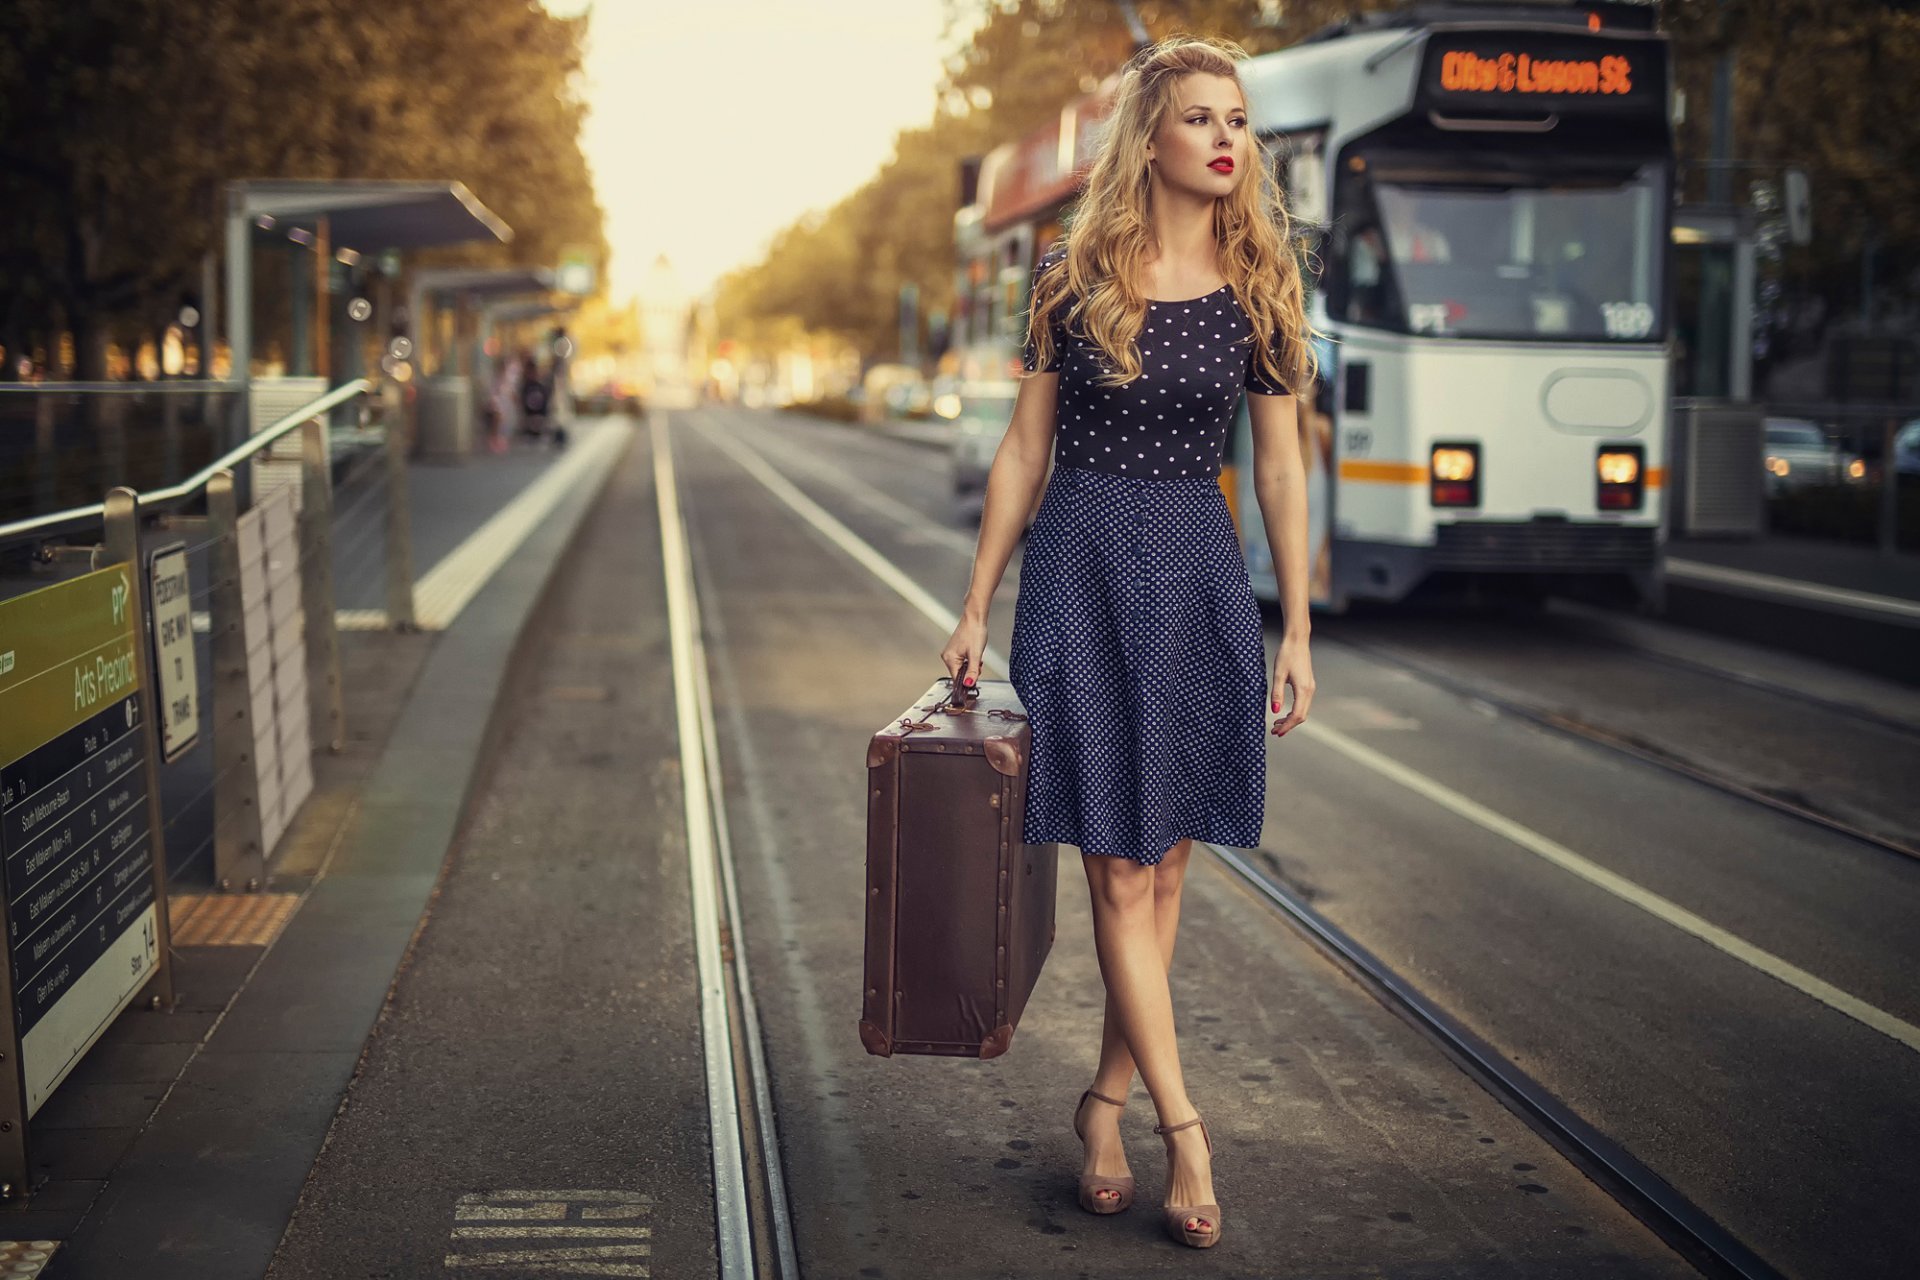 People 1920x1280 women model blonde long hair women outdoors street blue dress polka dots high heels red lipstick luggage suitcase tram legs crossed